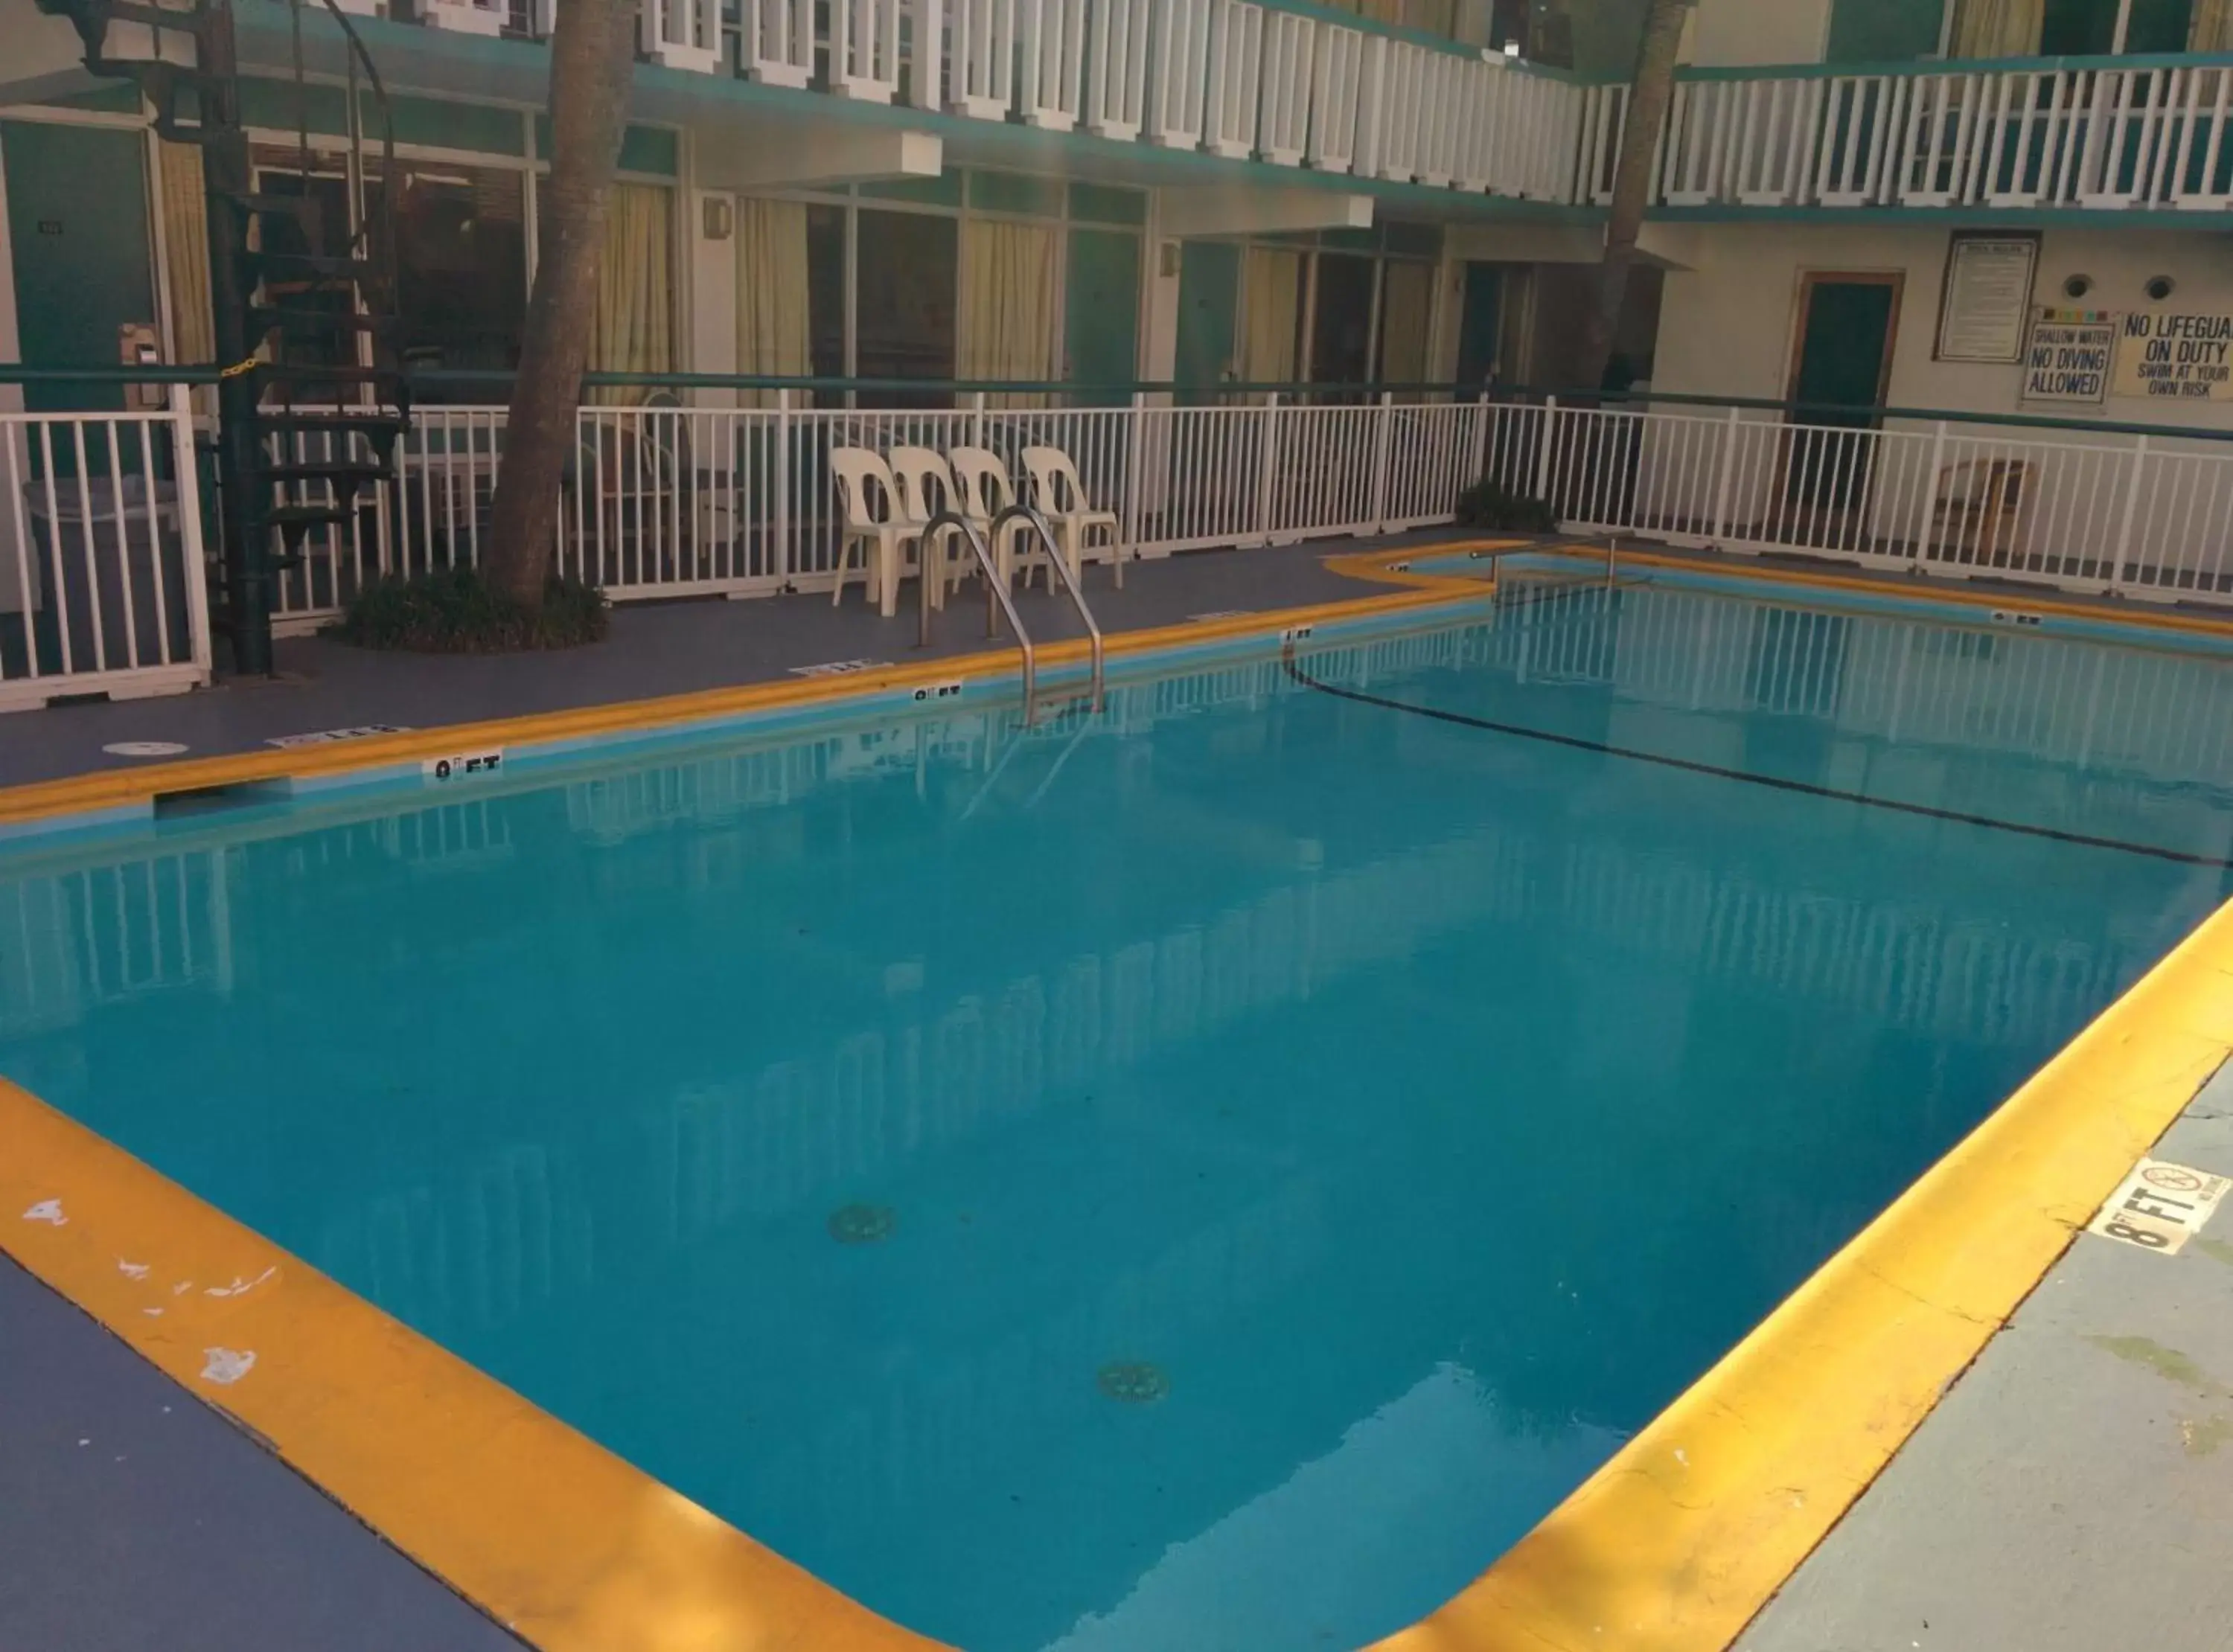 Day, Swimming Pool in Wayfarer Motel